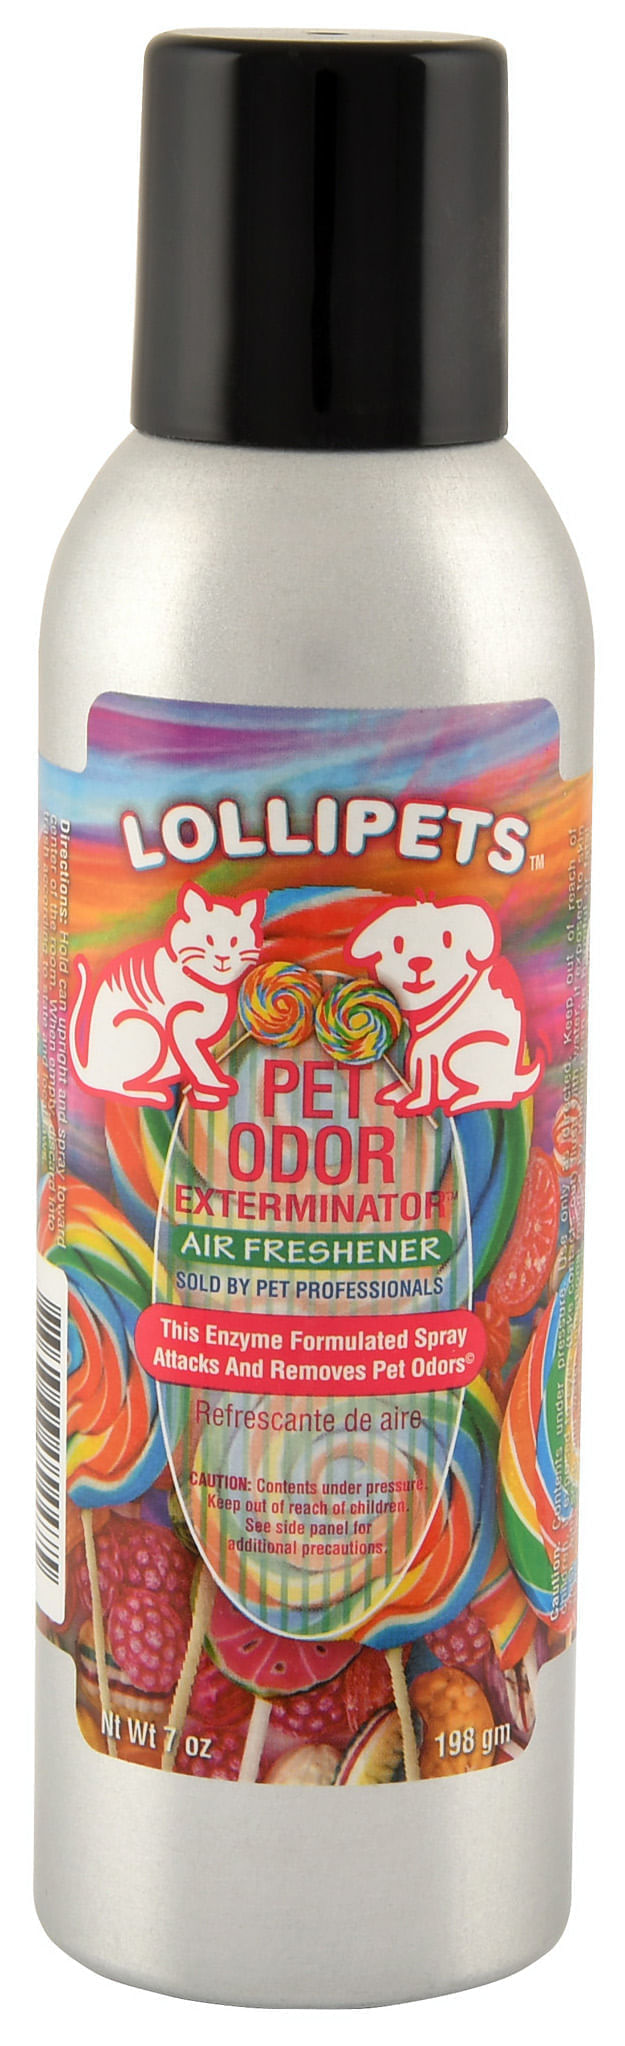 Pet-Odor-Exterminator-Air-Freshener-Spray-Lollipets